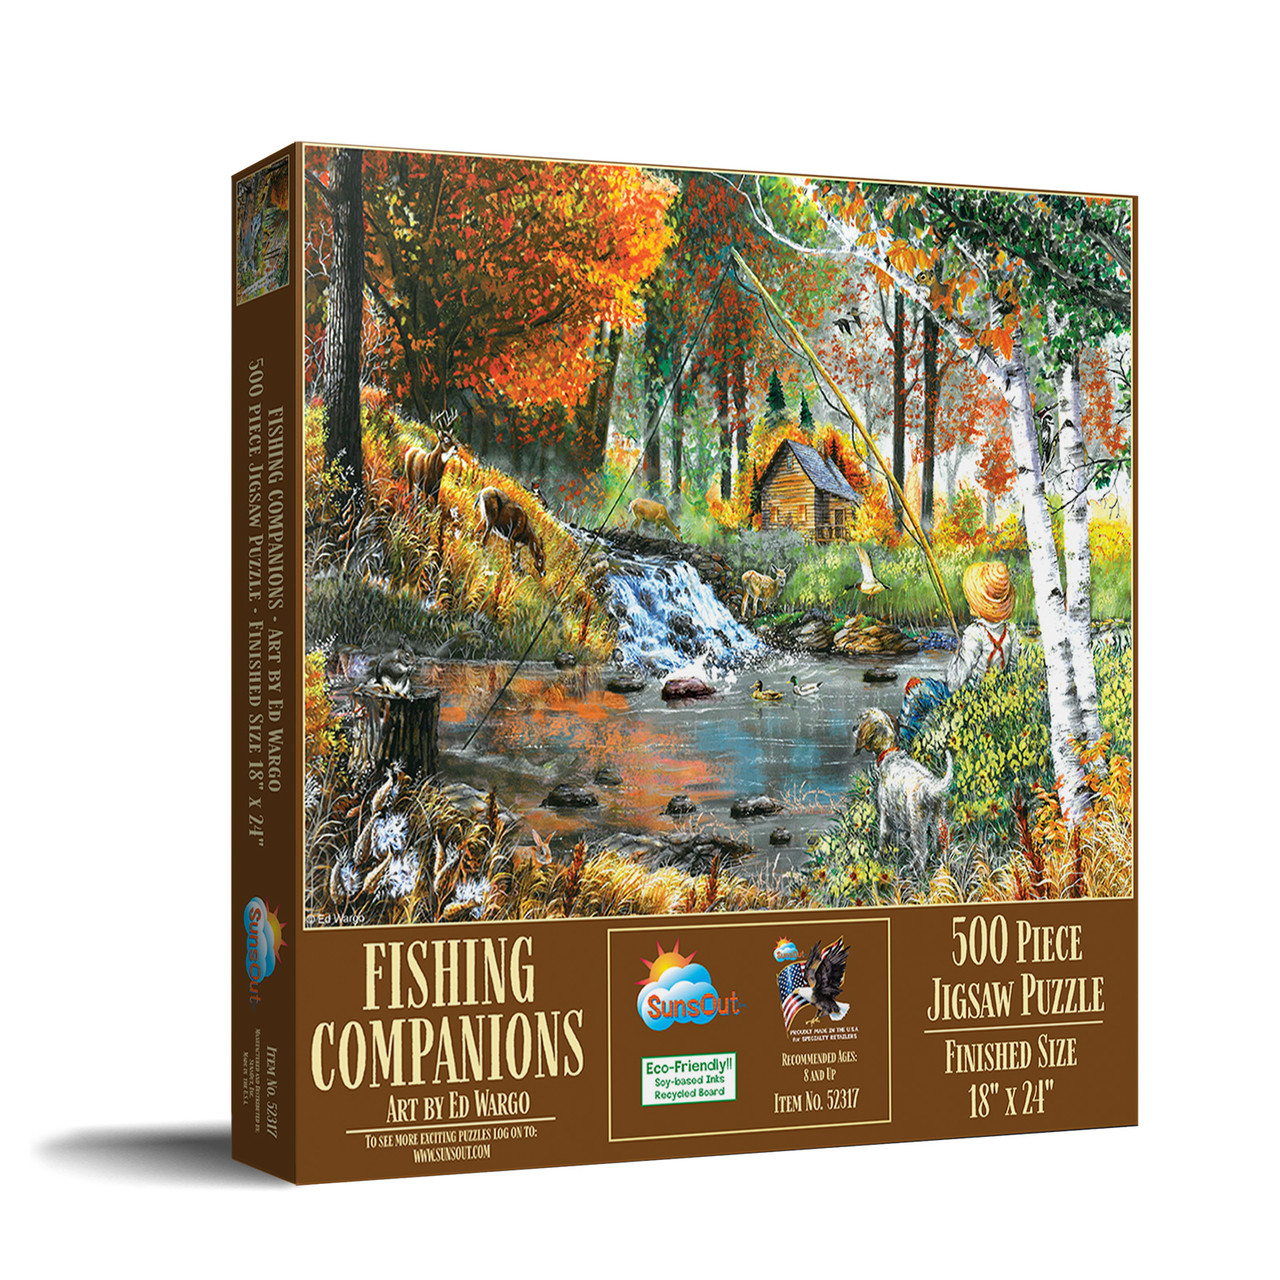 SUNSOUT INC - Fishing Companions - 500 pc Jigsaw Puzzle by Artist: Ed Wargo  - Finished Size 18 x 24 - MPN# 52317